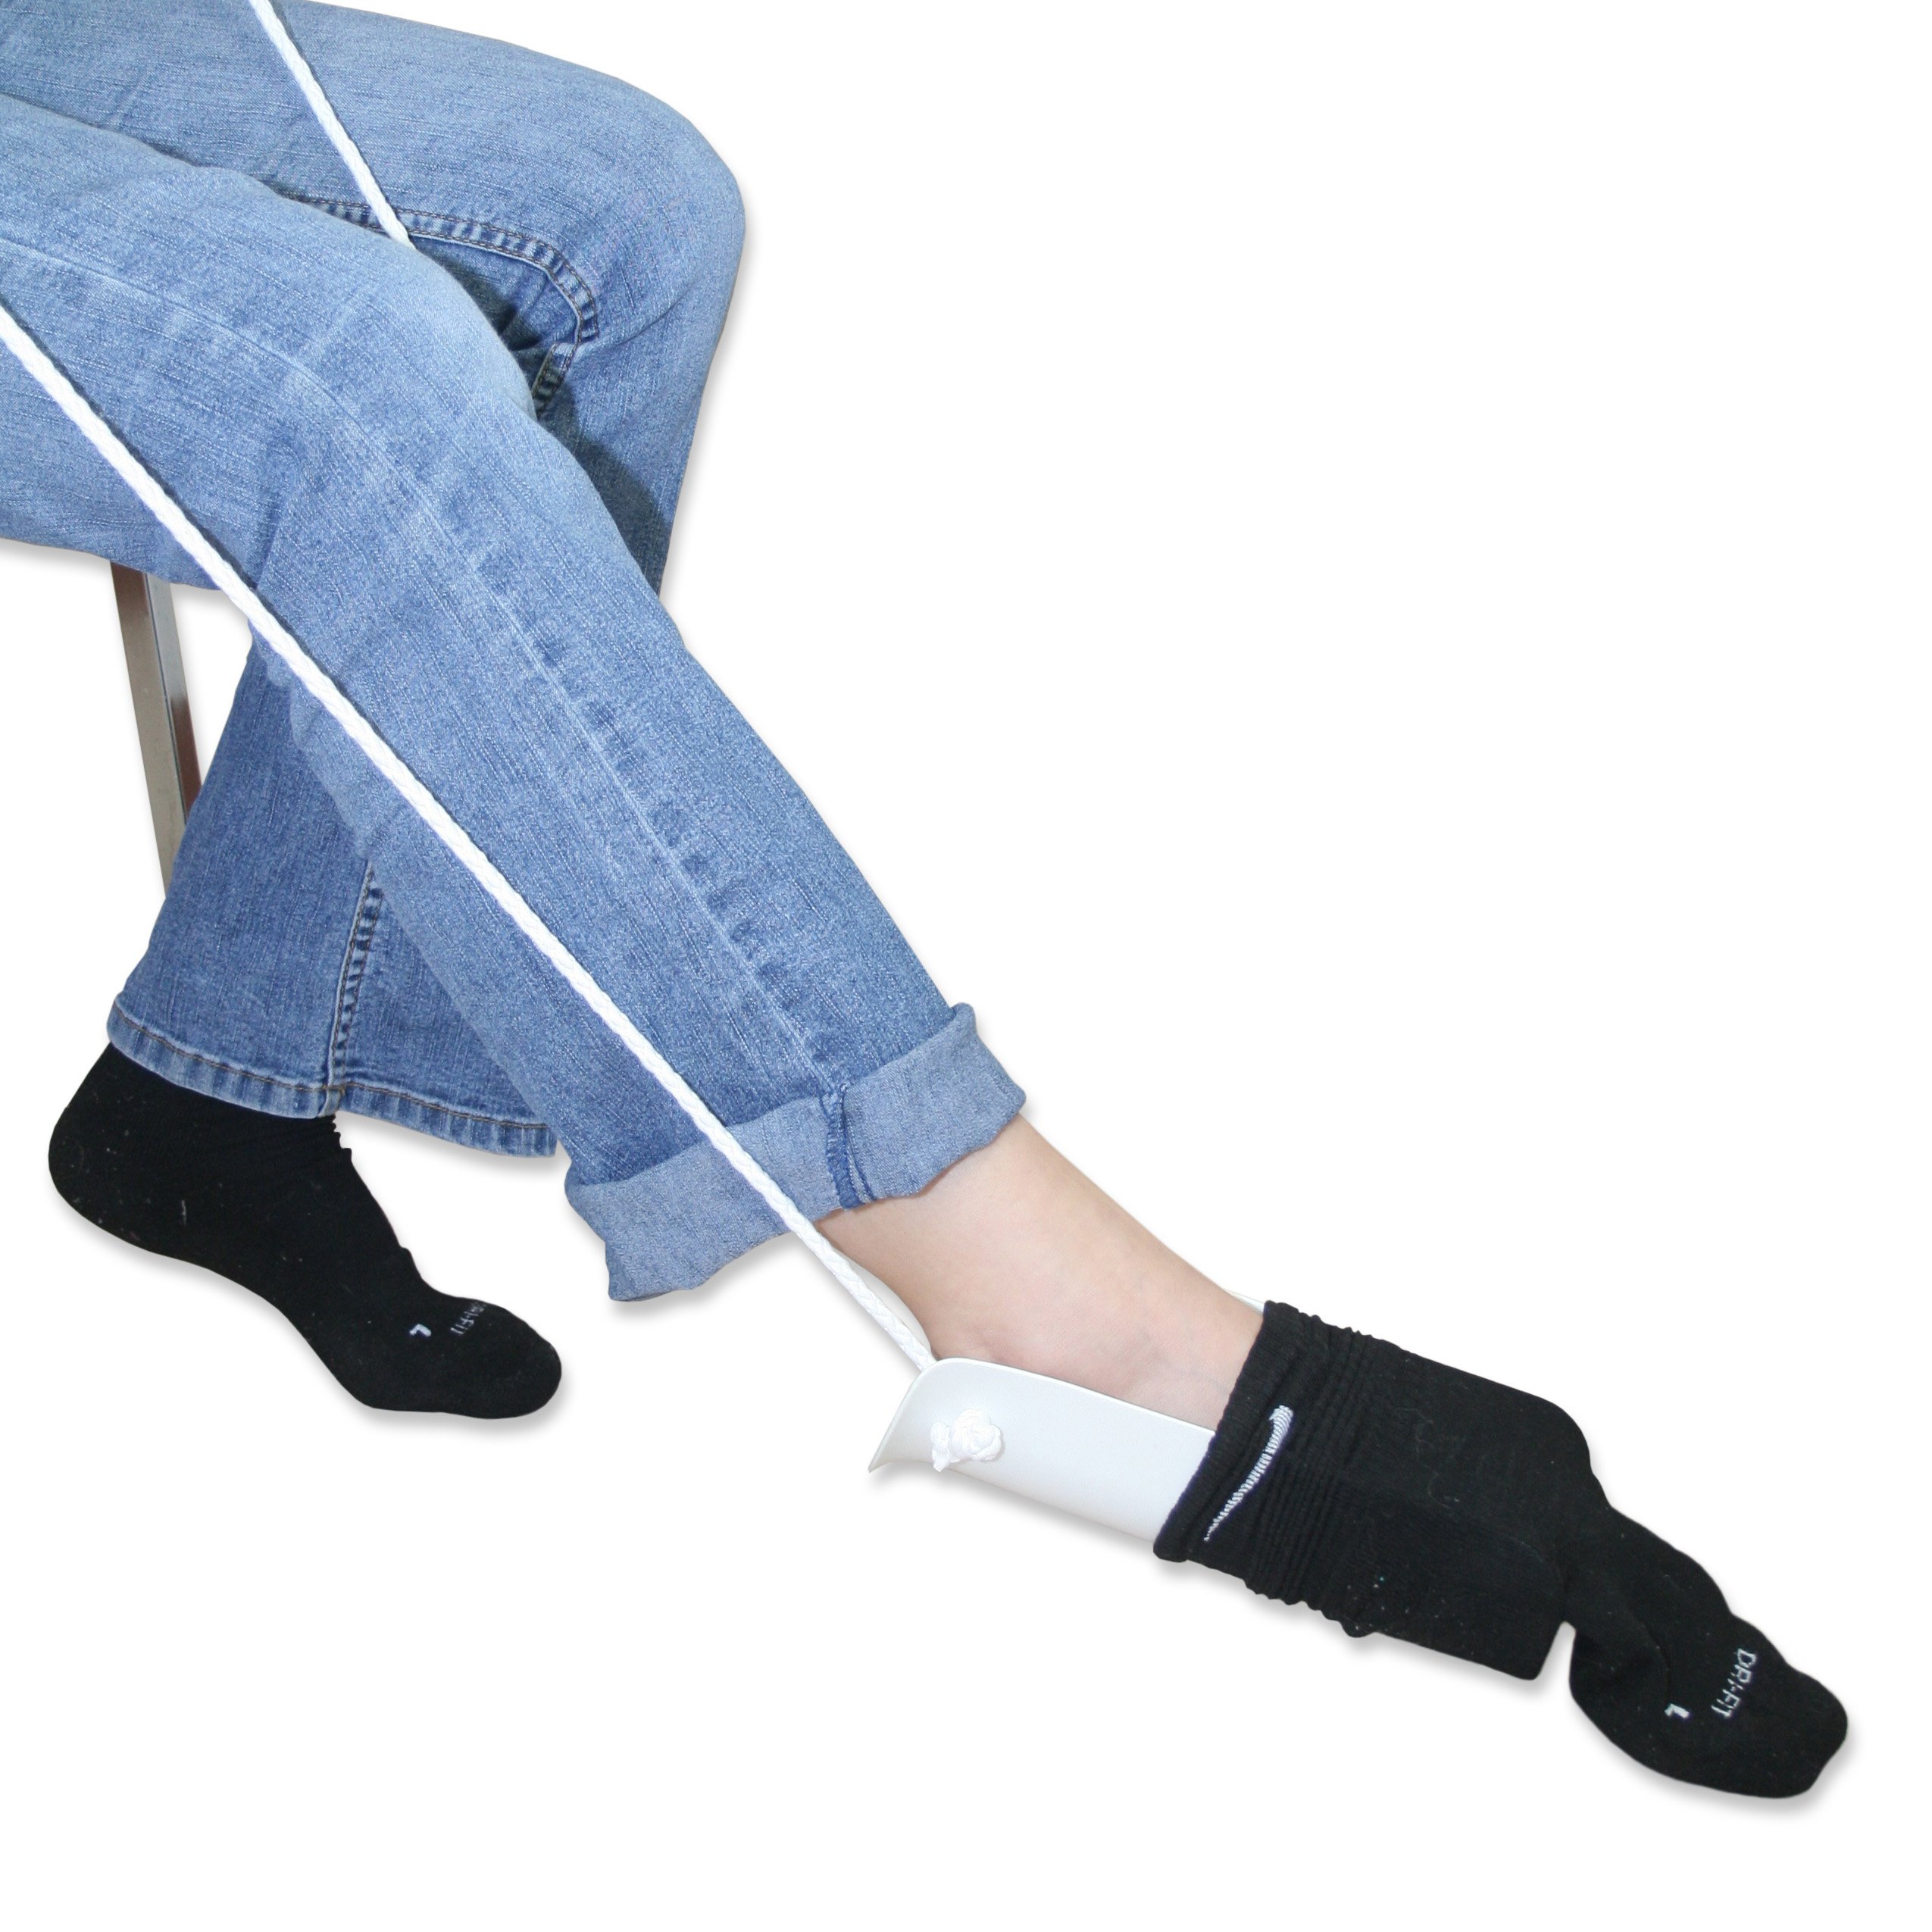 Rehabilitation Advantage Sock Aid with Foam Handles, Standard